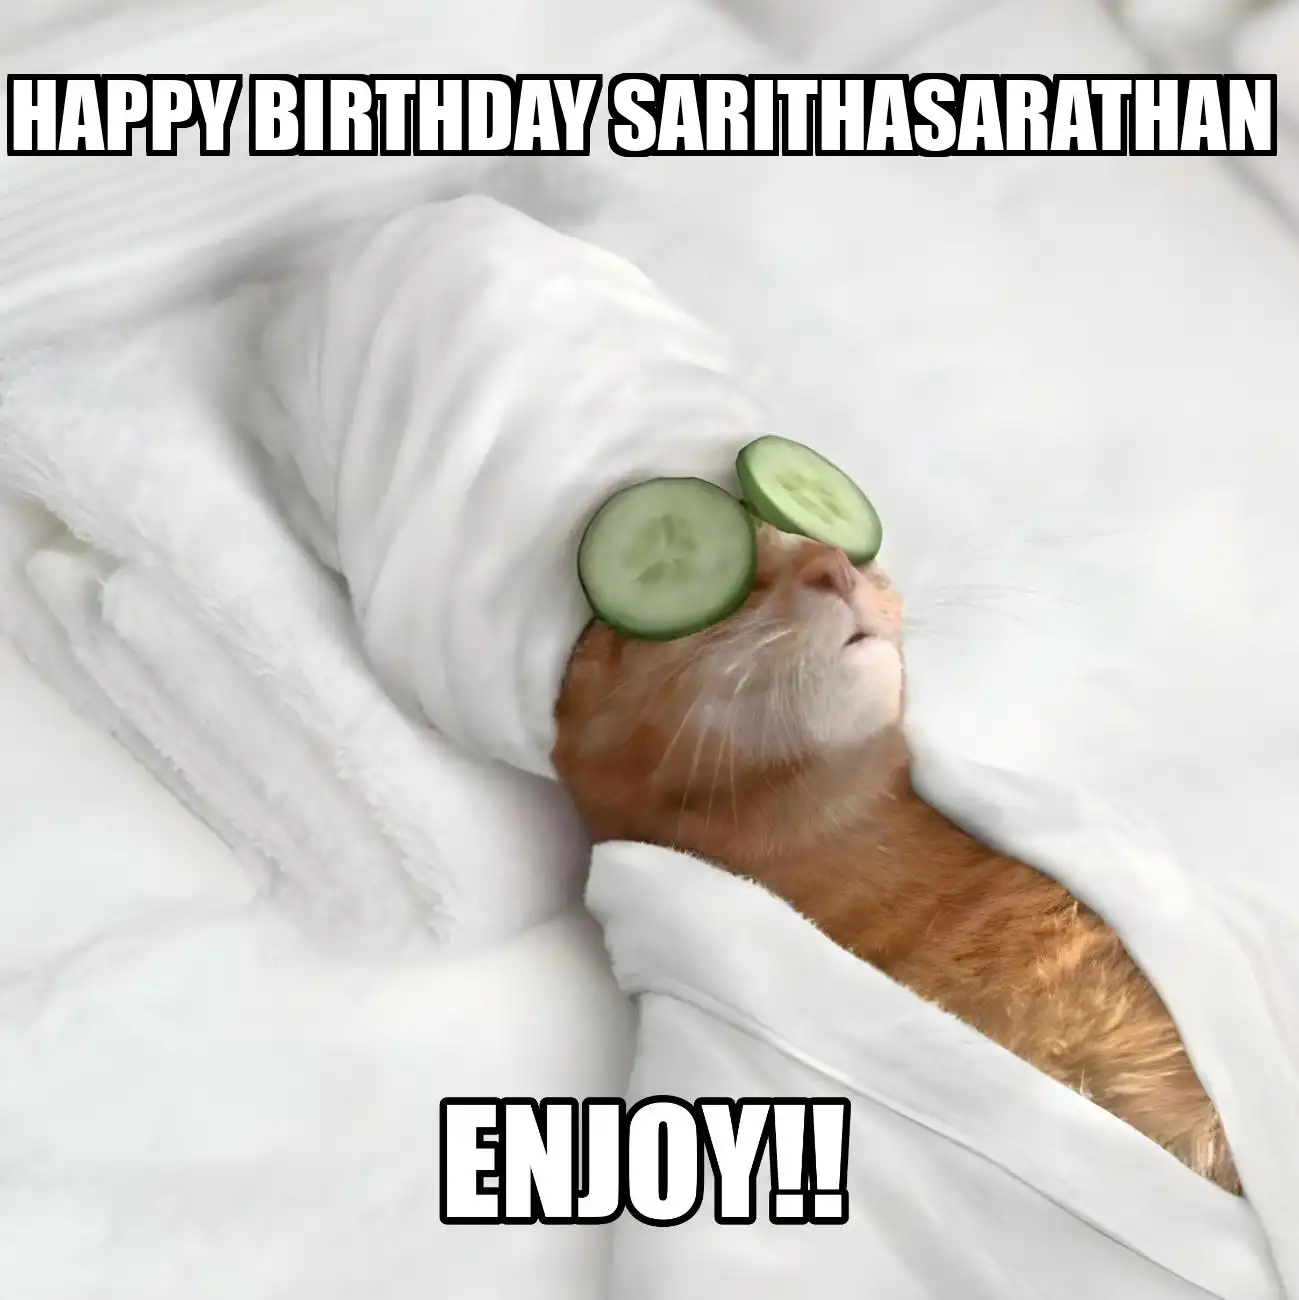 Happy Birthday Sarithasarathan Enjoy Cat Meme